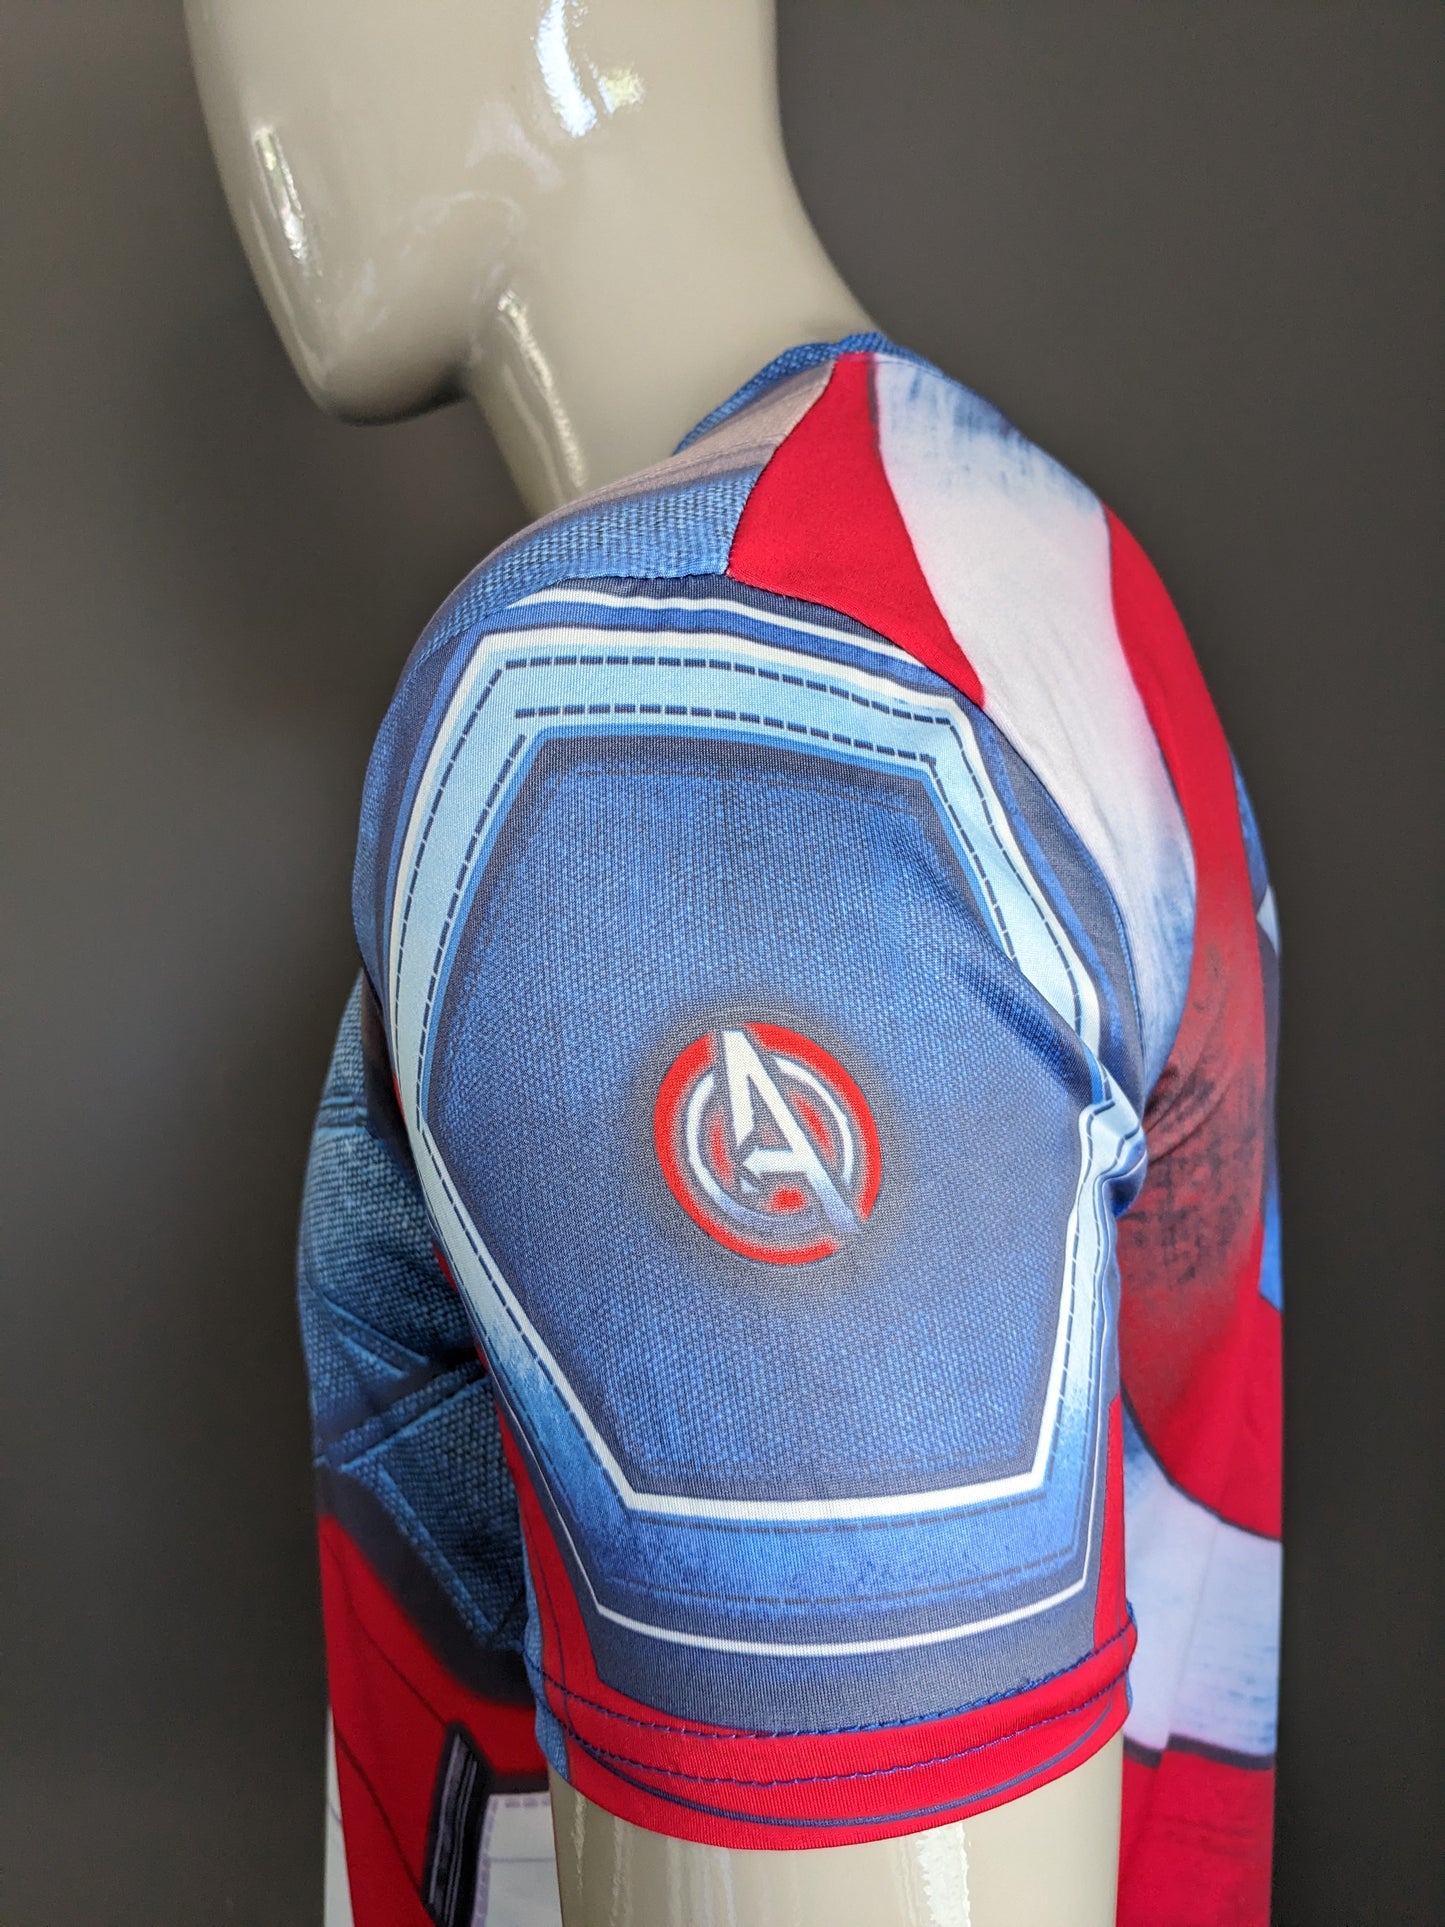 Captain America Shirt. Impression bleu blanc rouge. Taille M / L. Stretch.